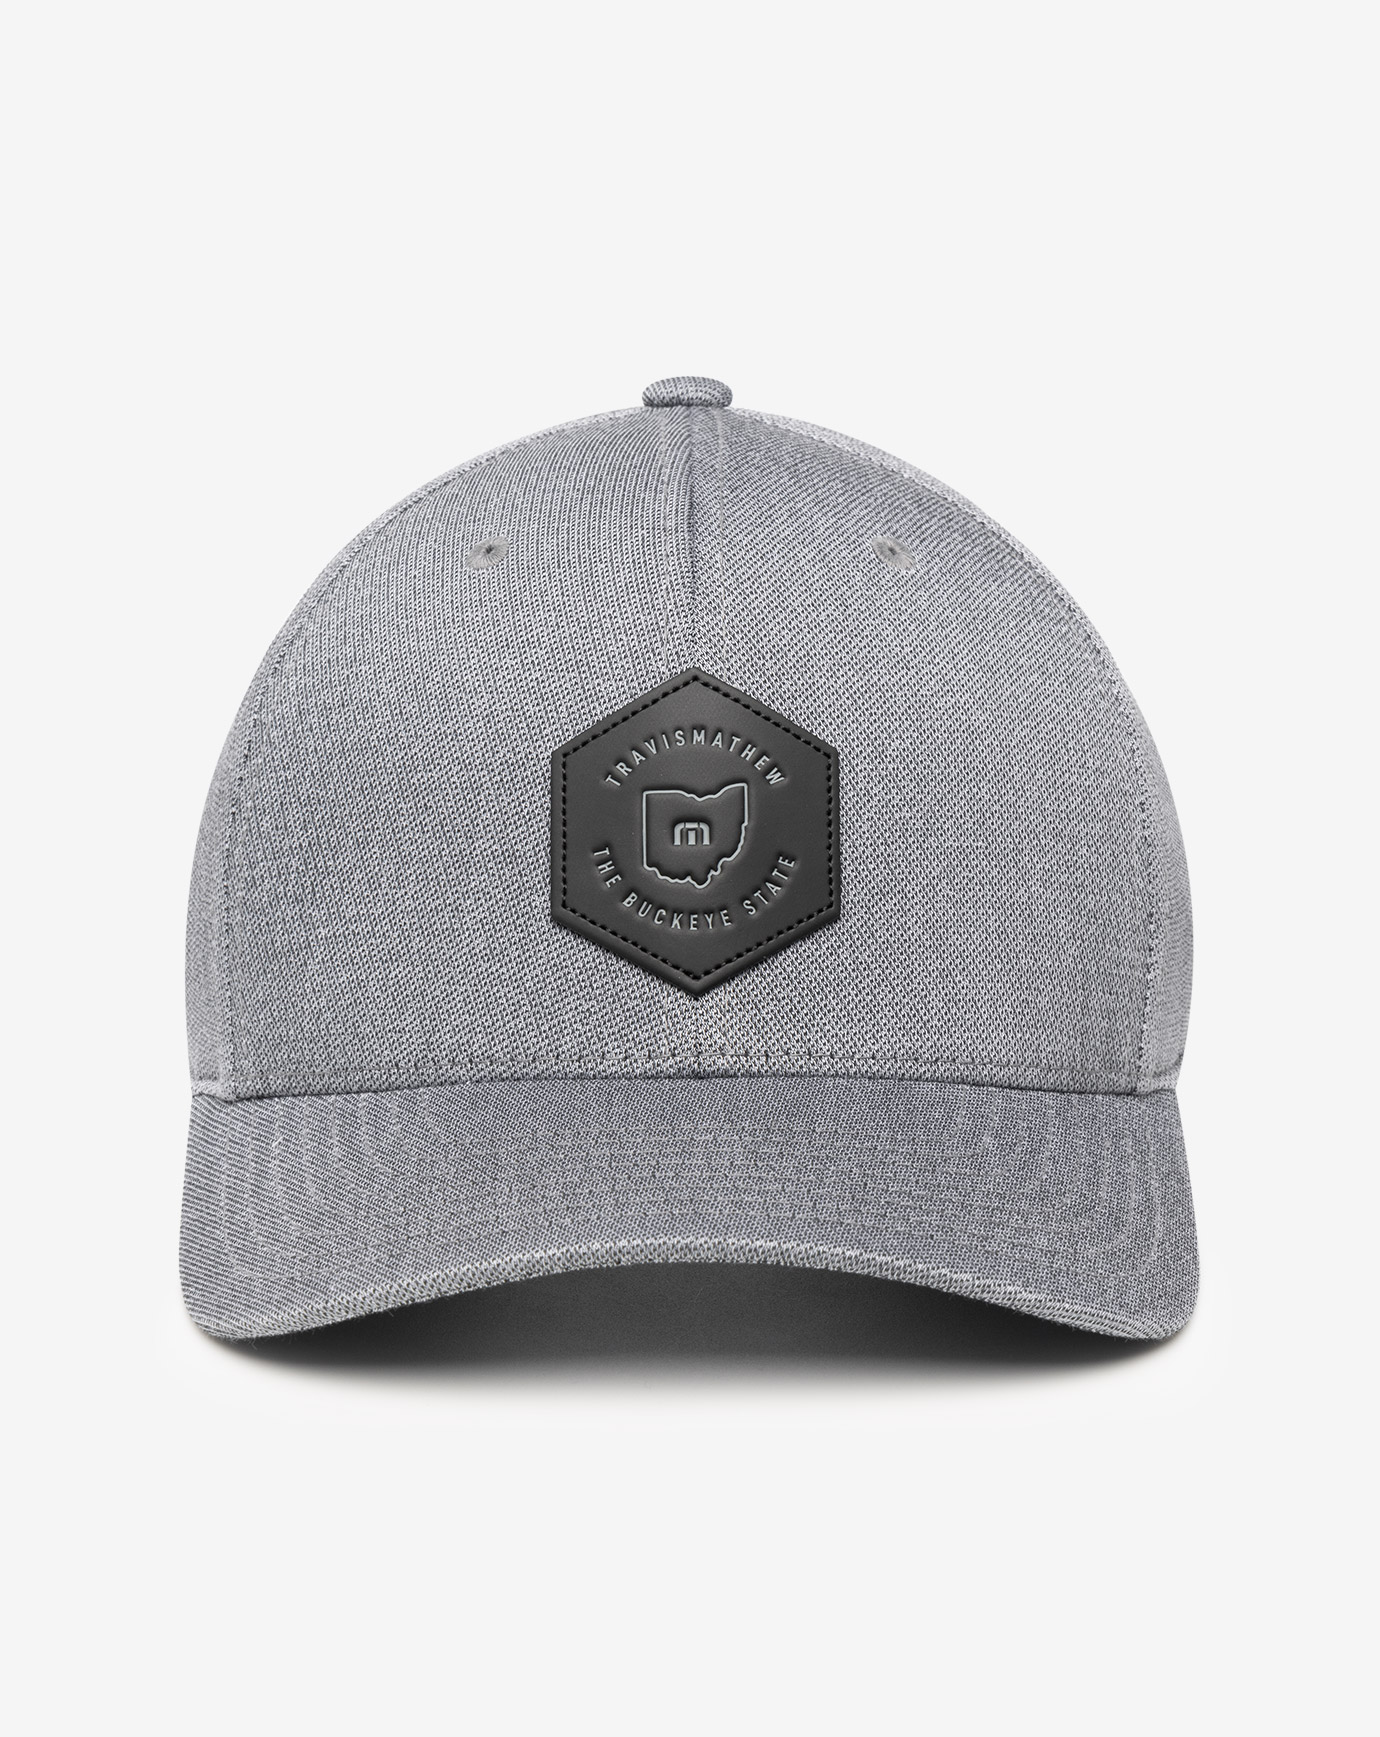 YOURE FINE SNAPBACK HAT | TravisMathew | Flex Caps